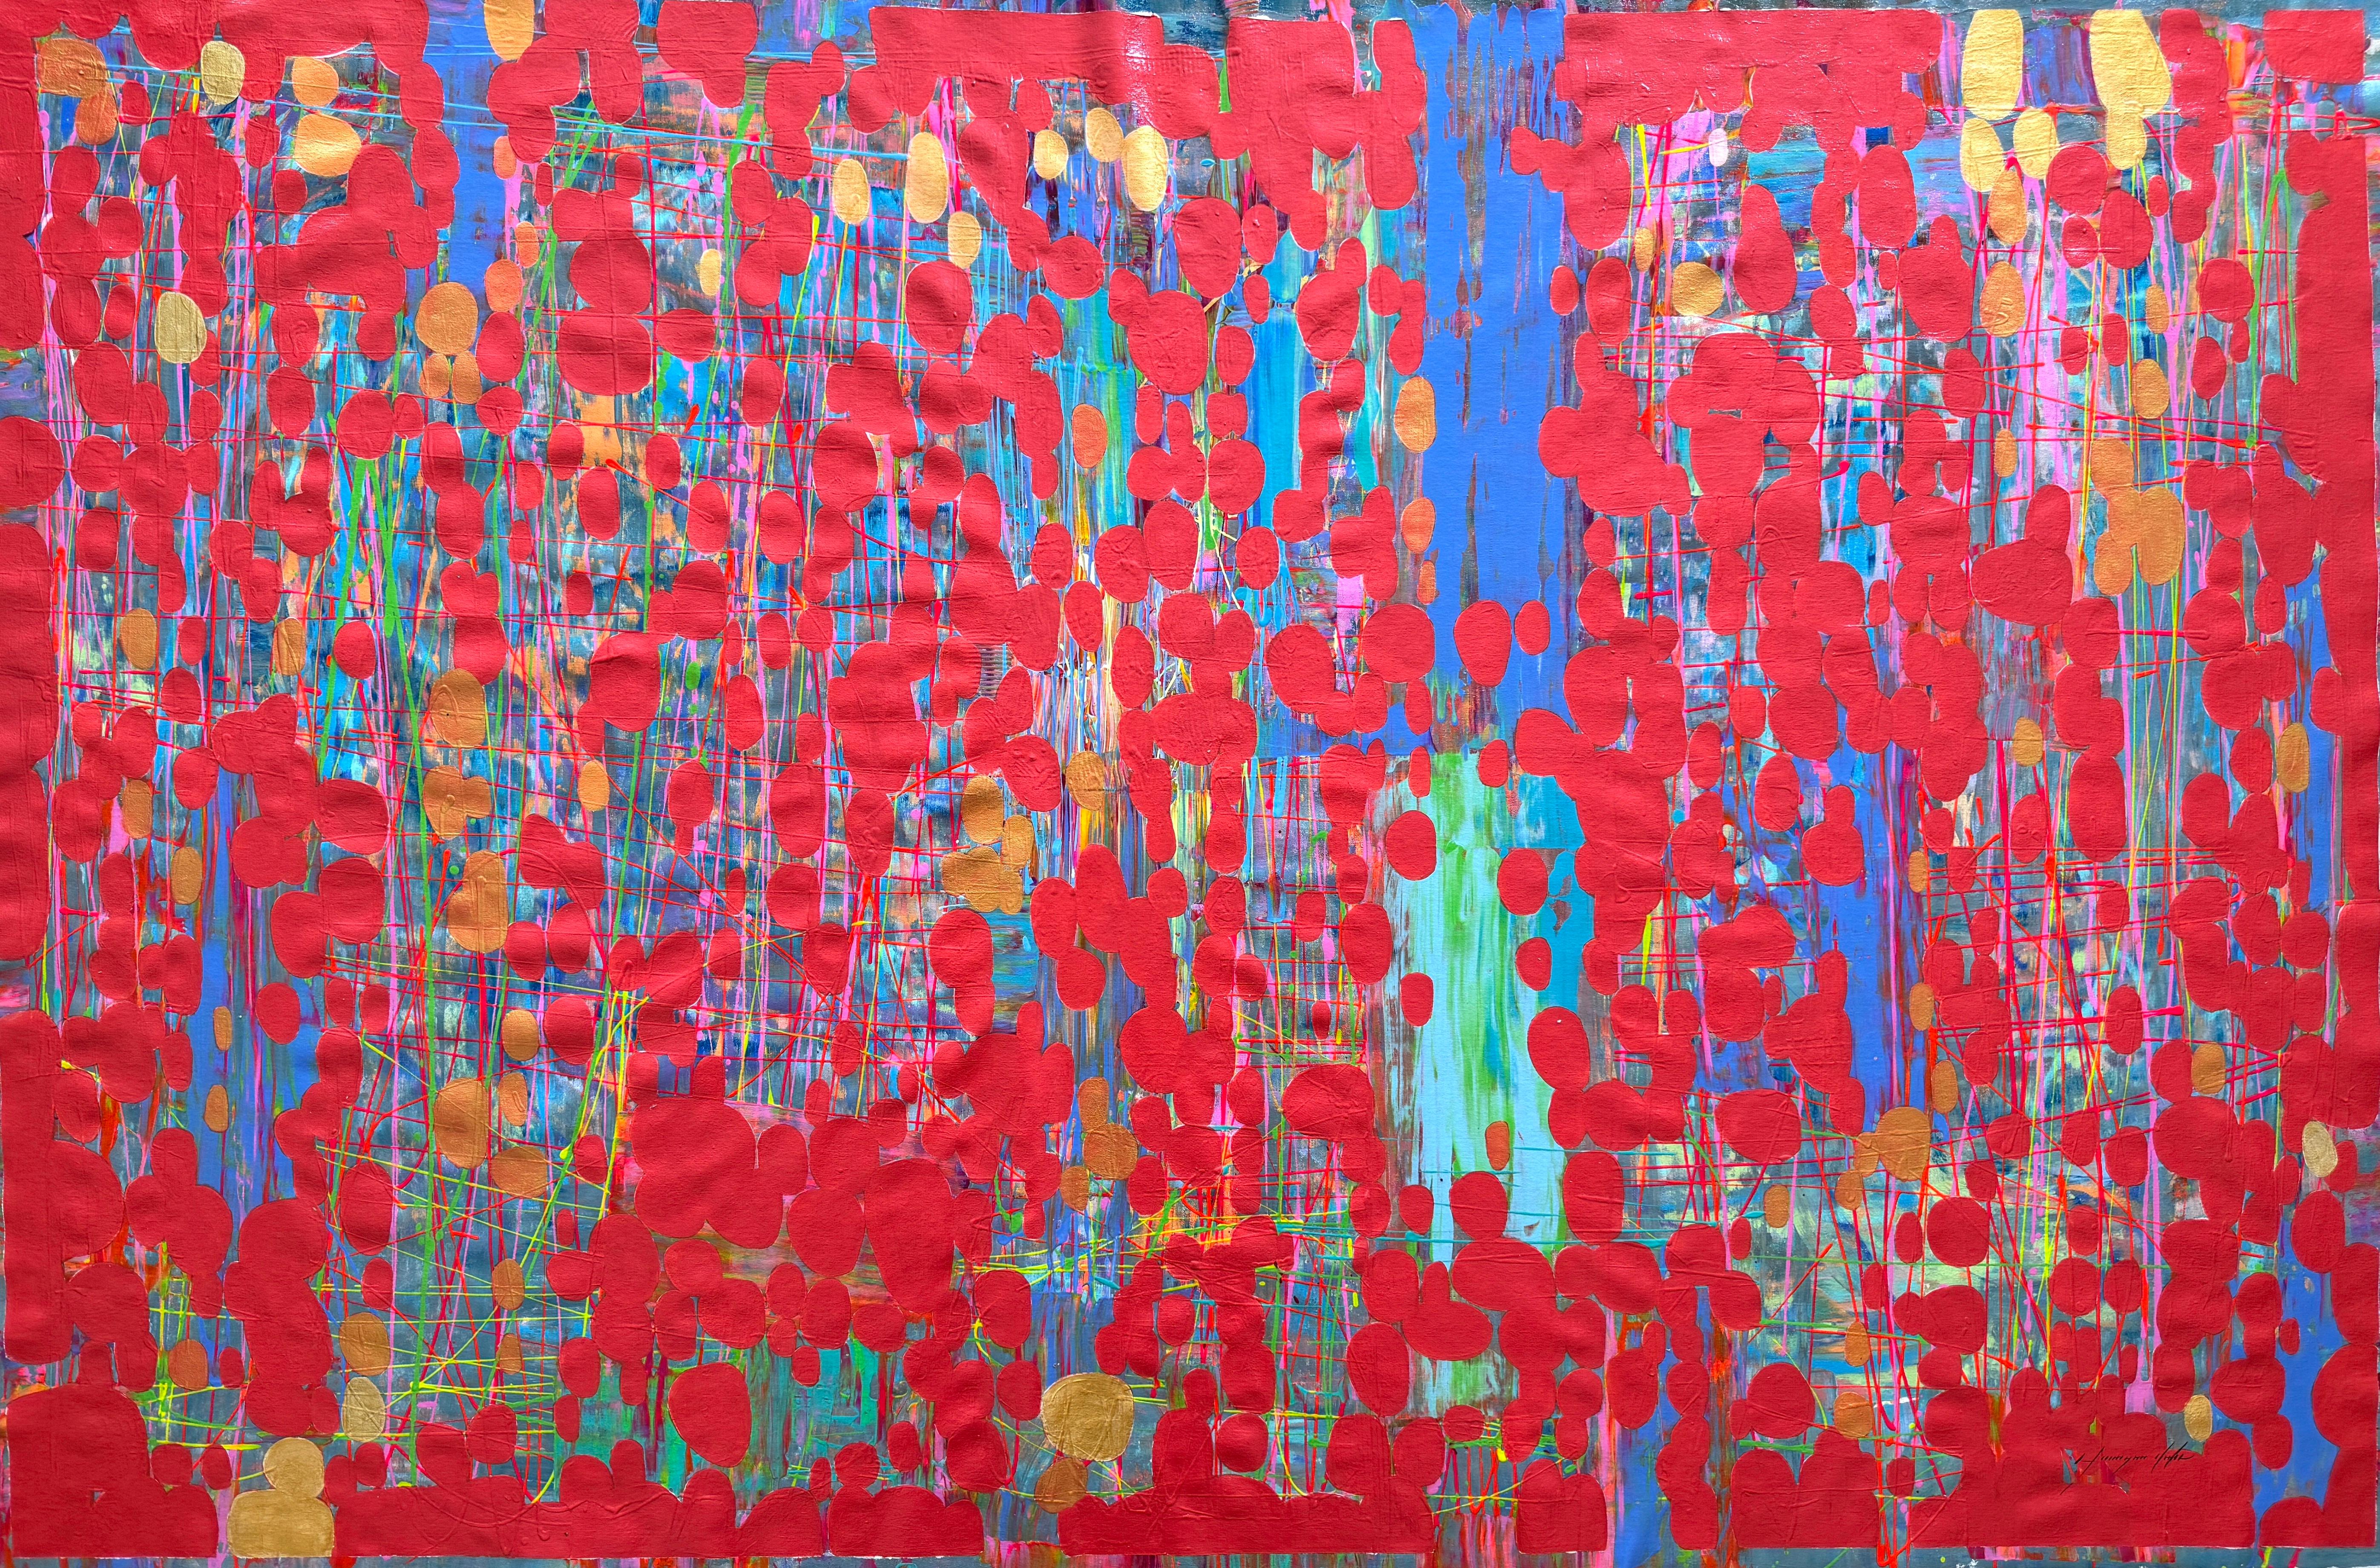 Red Shade, Abstract Original Painting, Ready to Hang